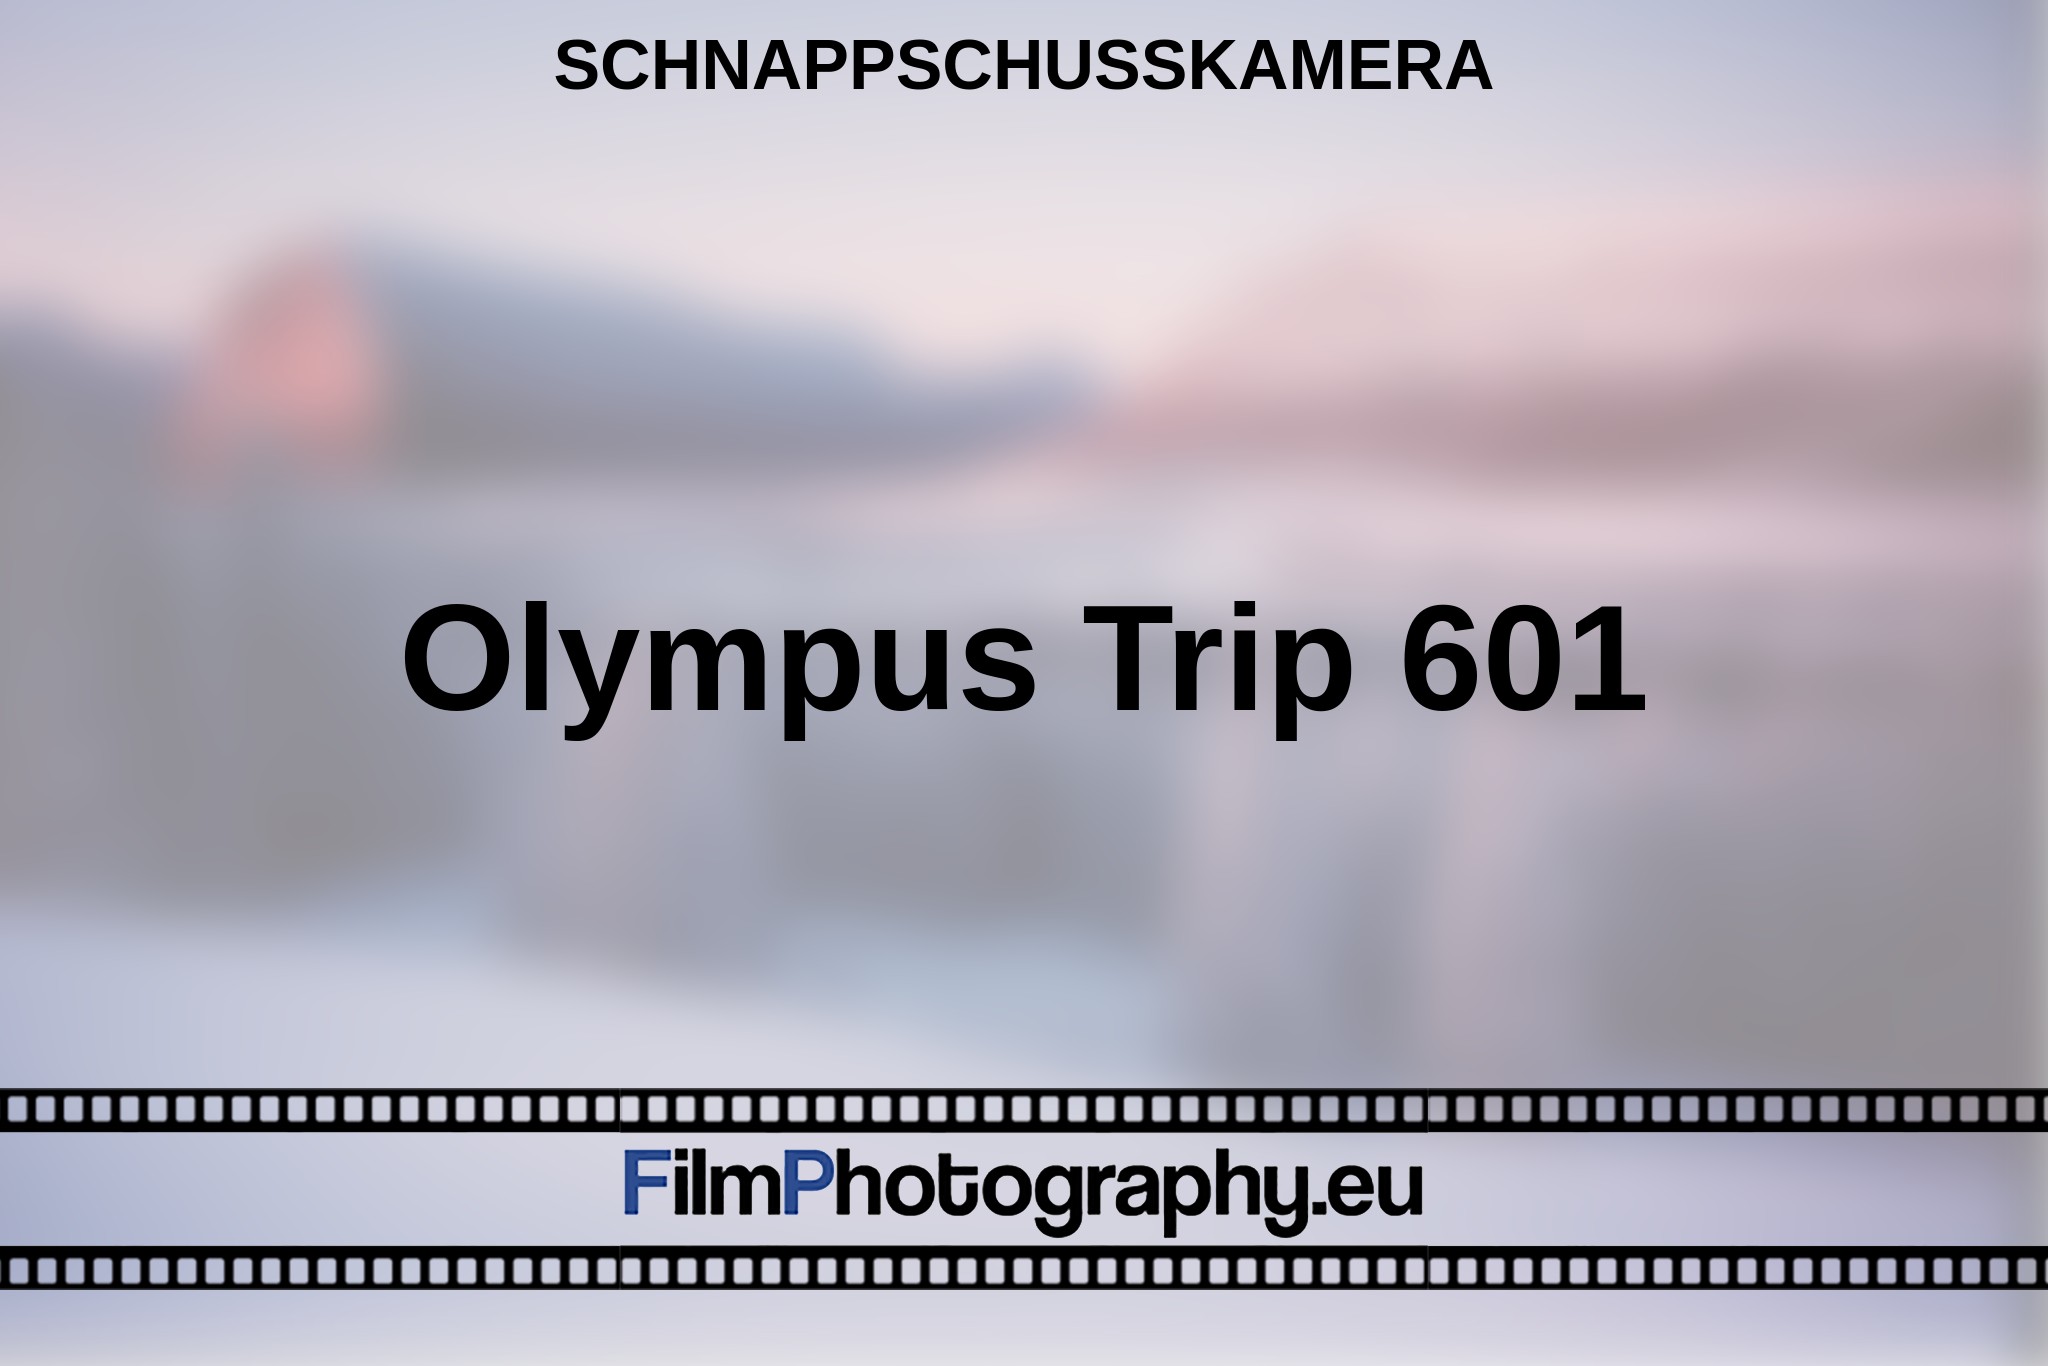 olympus-trip-601-schnappschusskamera-bnv.jpg